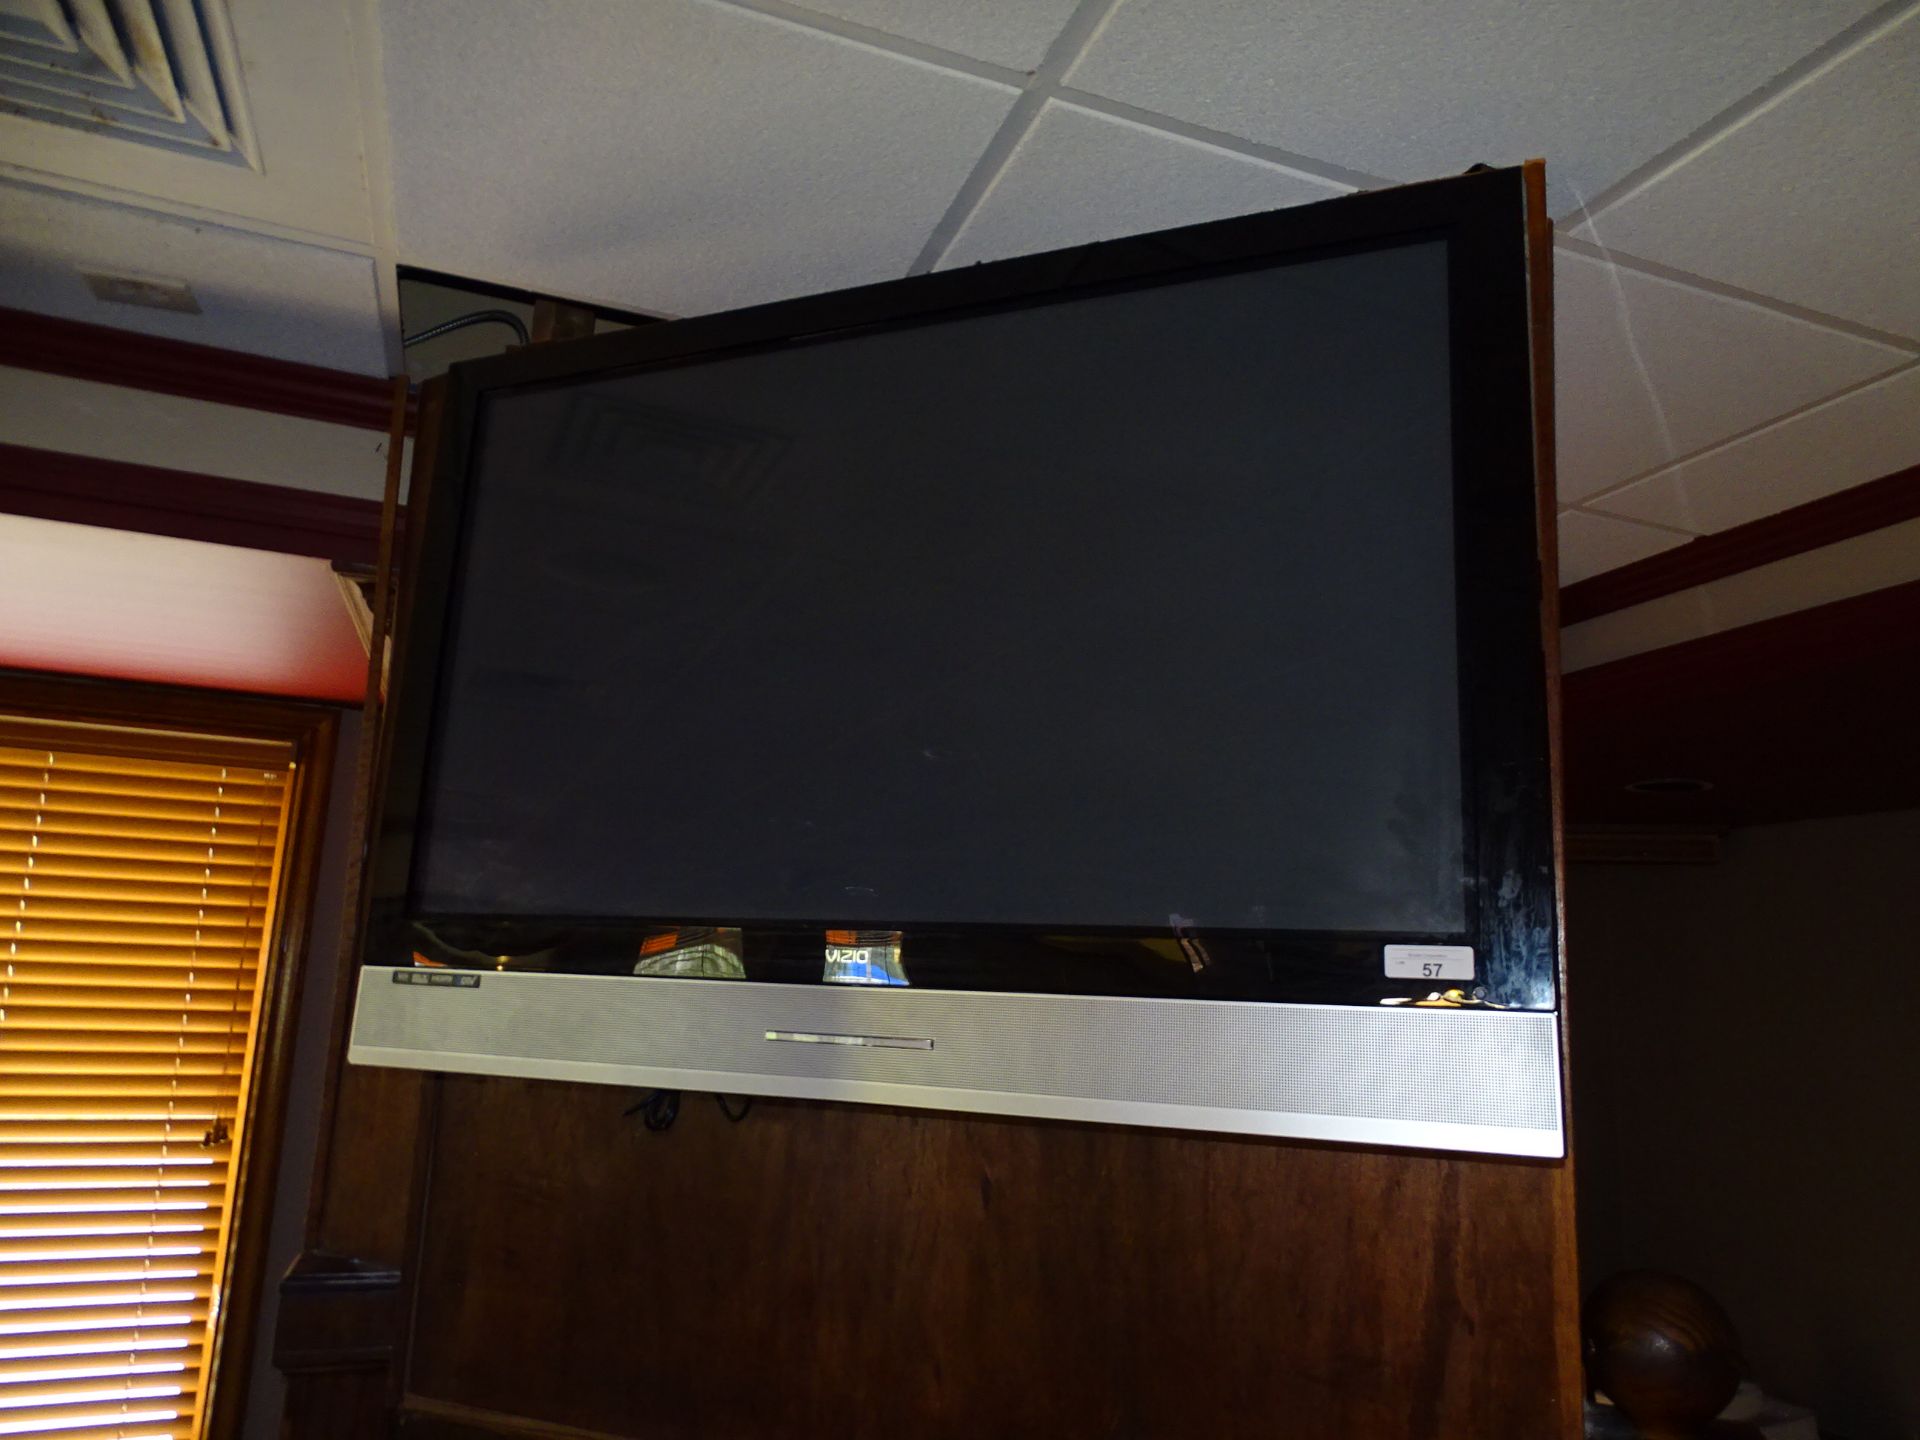 Vizio #VP50HDTV10A 50" Flat Screen Plasma TV - Image 2 of 2